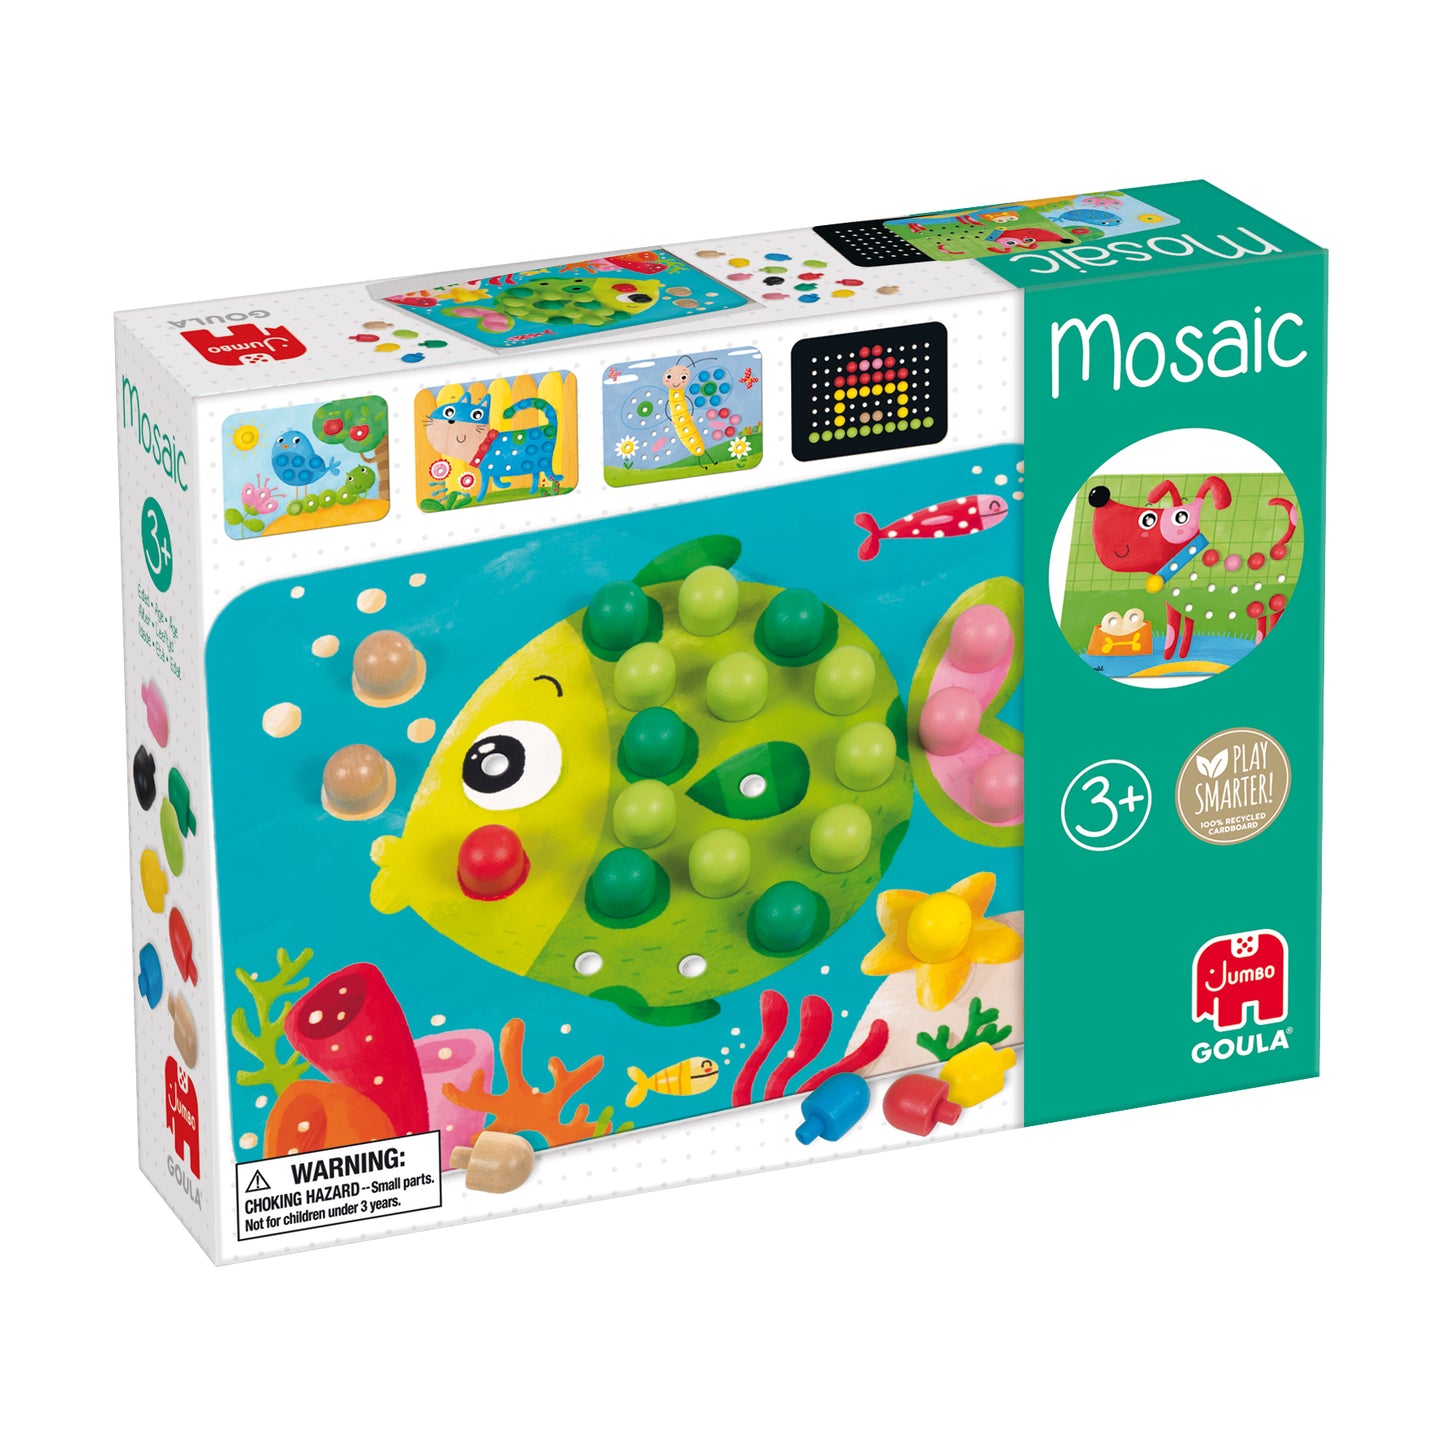 Mosaic - product image - Jumboplay.com